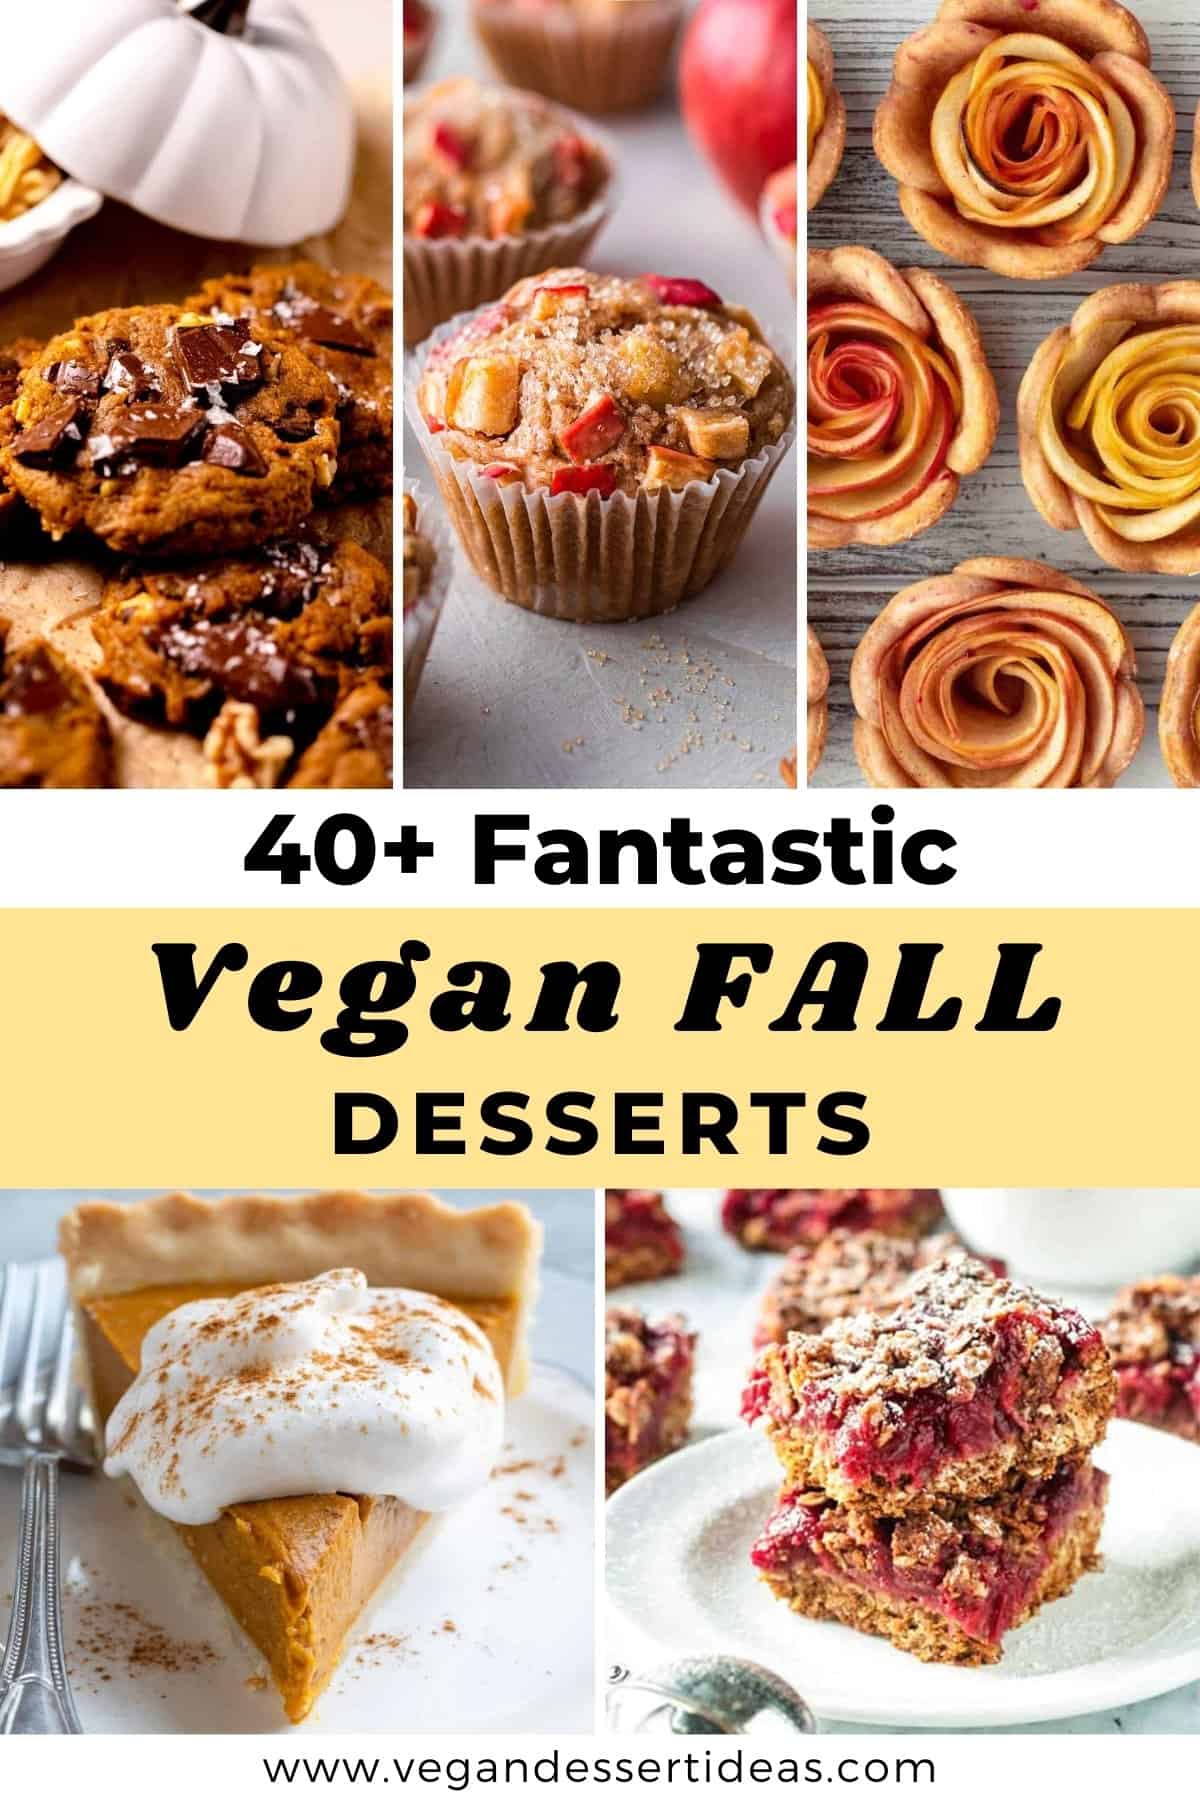 Cookies, muffins, tart, pie, bars "40+ Fantastic vegan fall desserts".